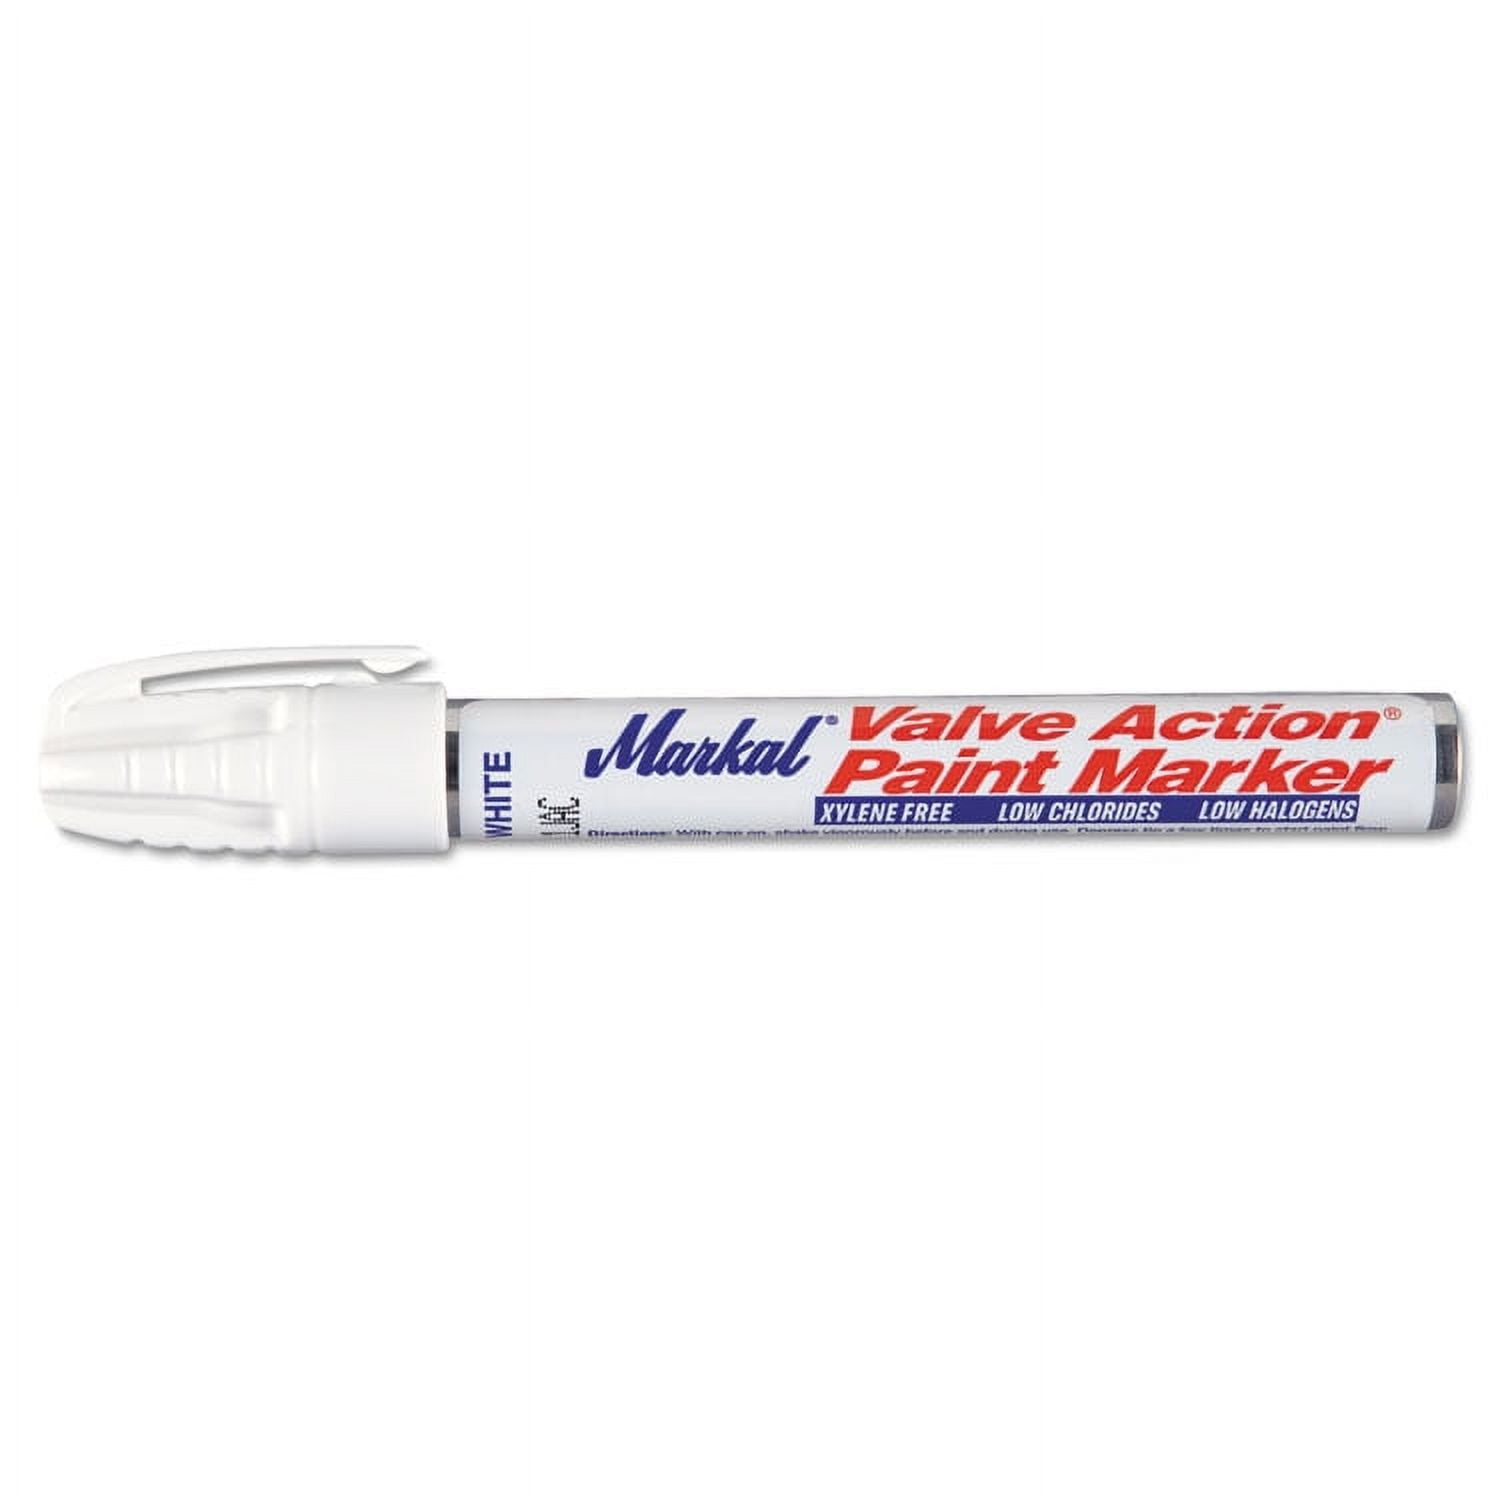 Markal 96809 Permanent Valve Action Paint Marker, Medium Tip